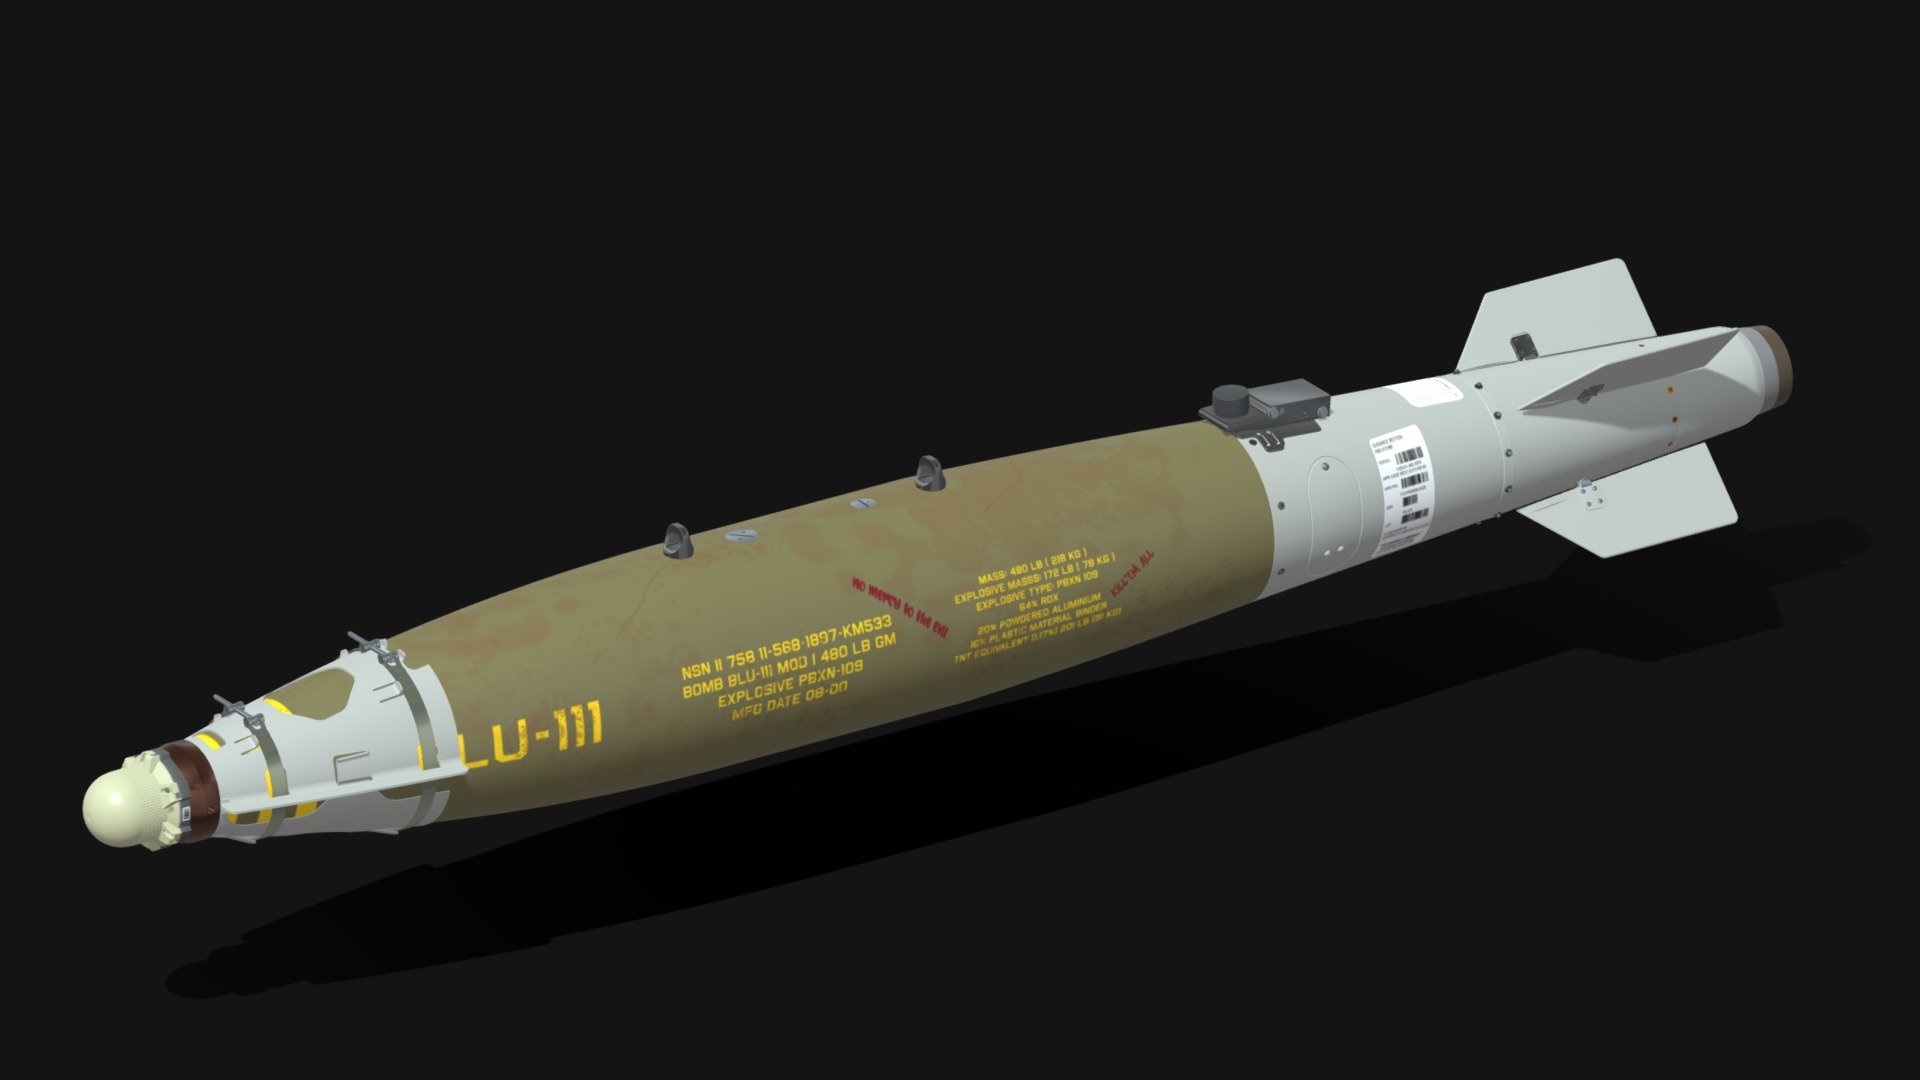 GBU-38 VB JDAM INS/GPS guided bomb modelled by Edgar Brito 3d model